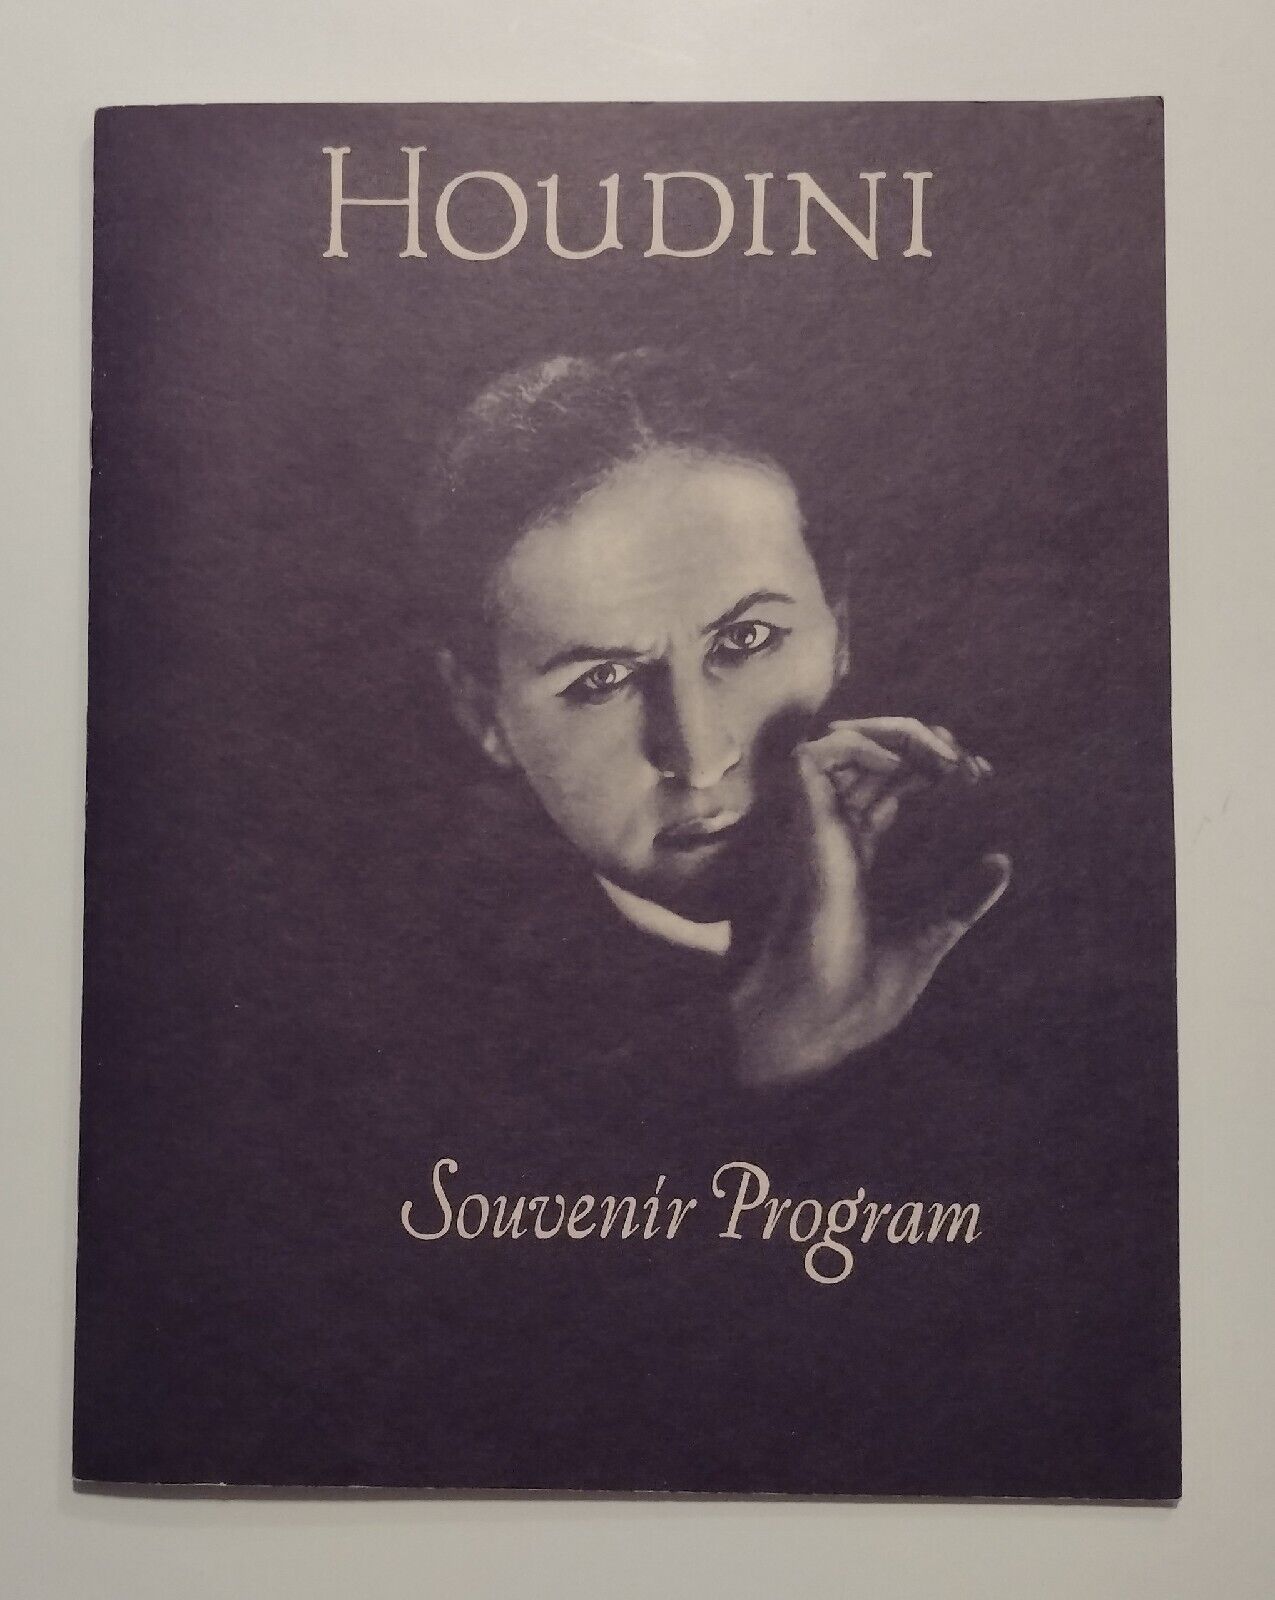 Houdini Souvenir Program 1979 Jacobs Antique Jewels Series Reprint